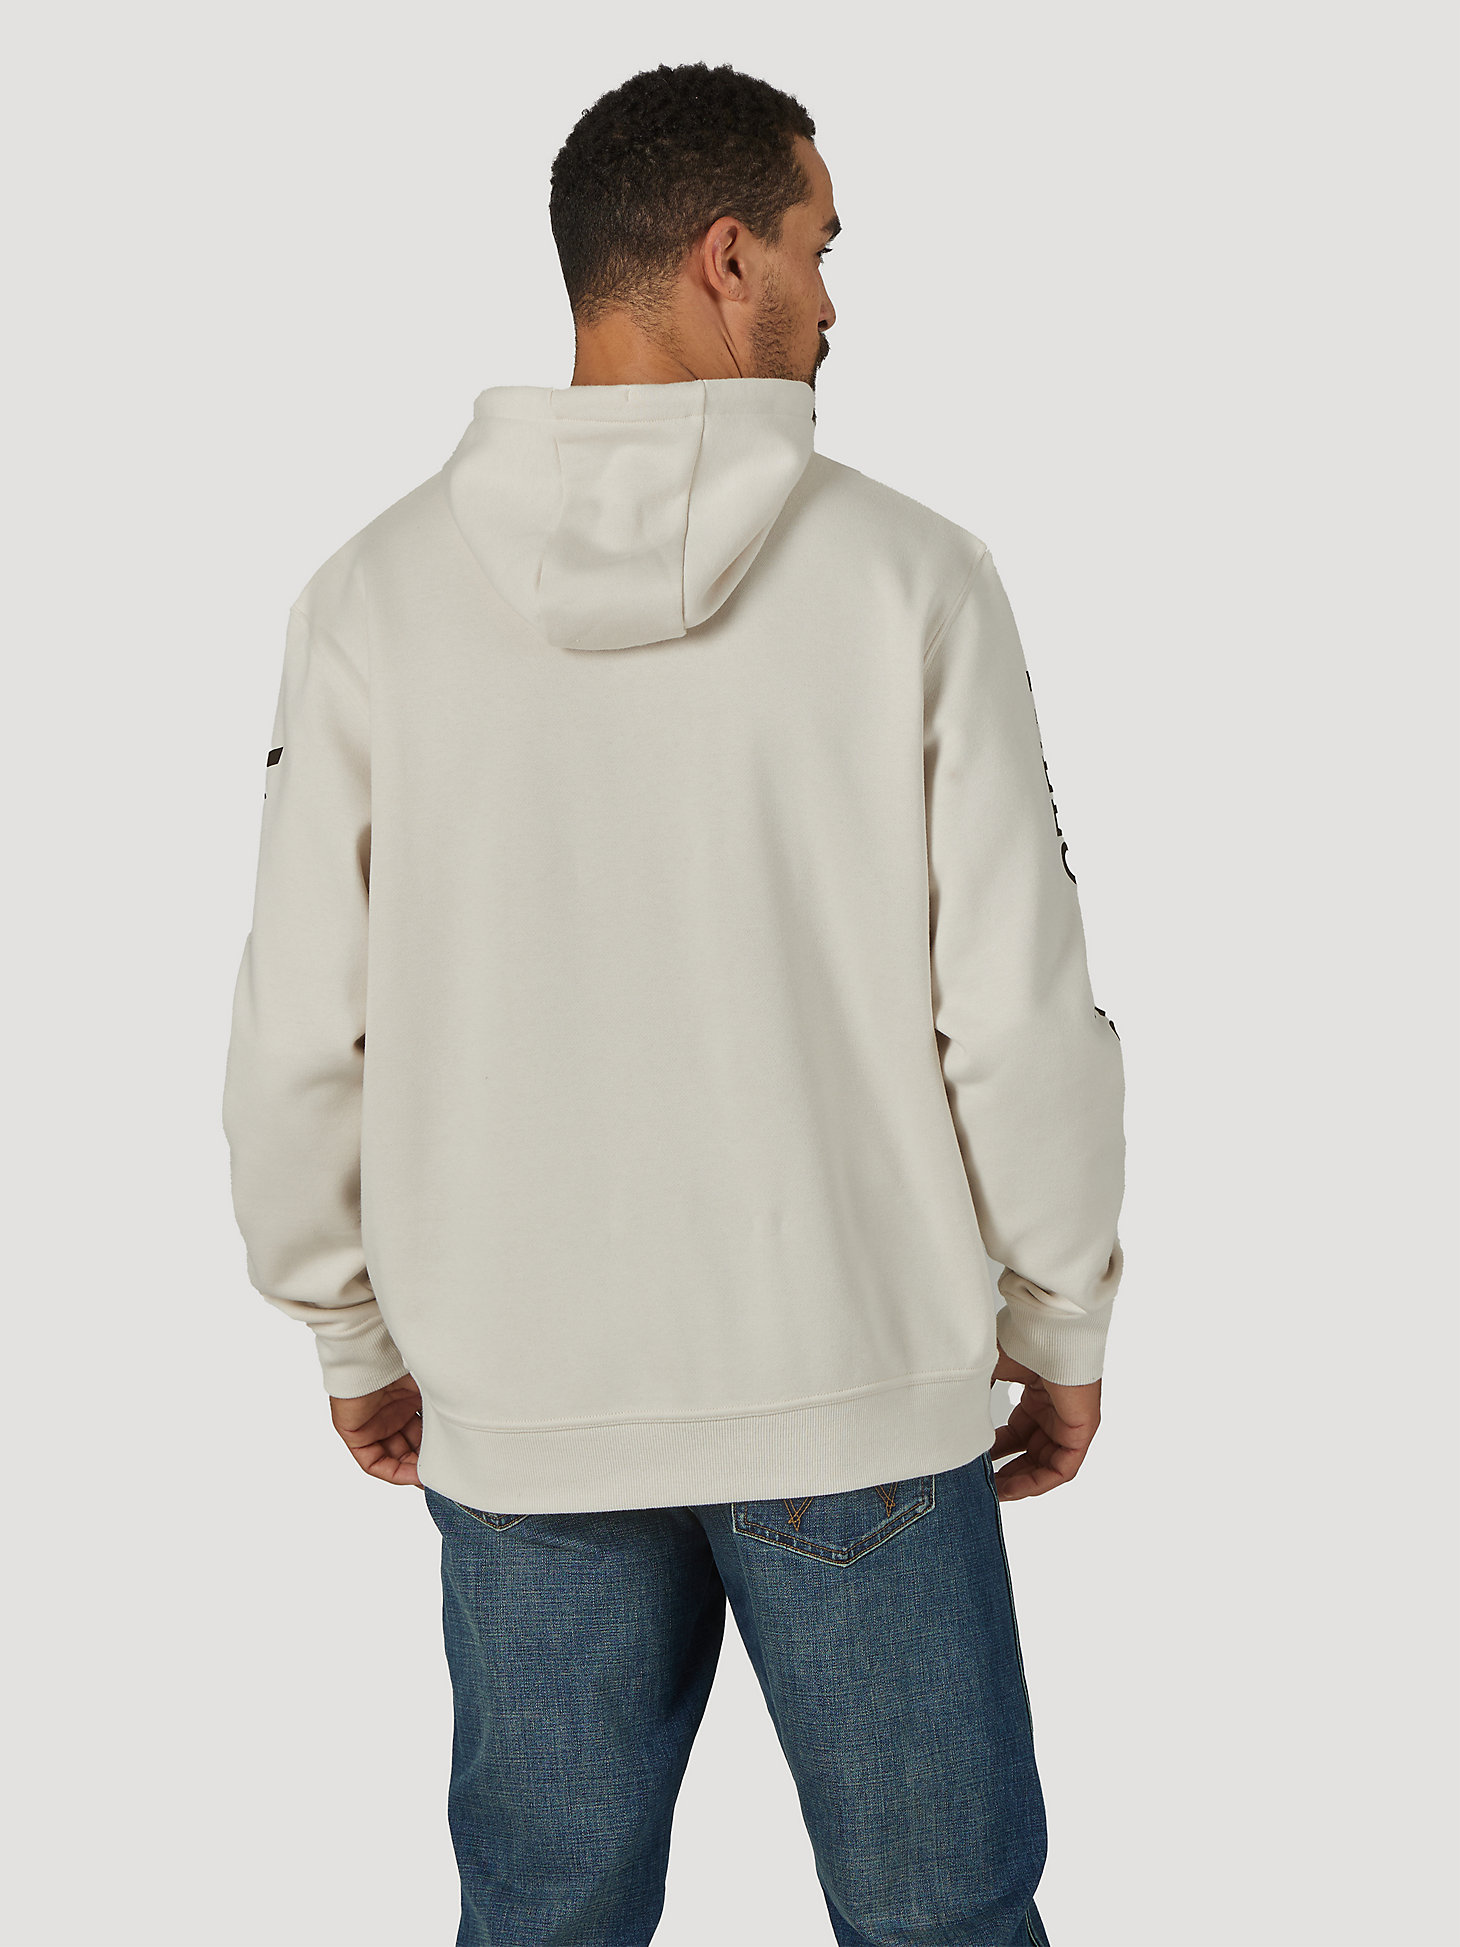 Wrangler x Yellowstone Logo Sleeve Hoodie in Off-White alternative view 1